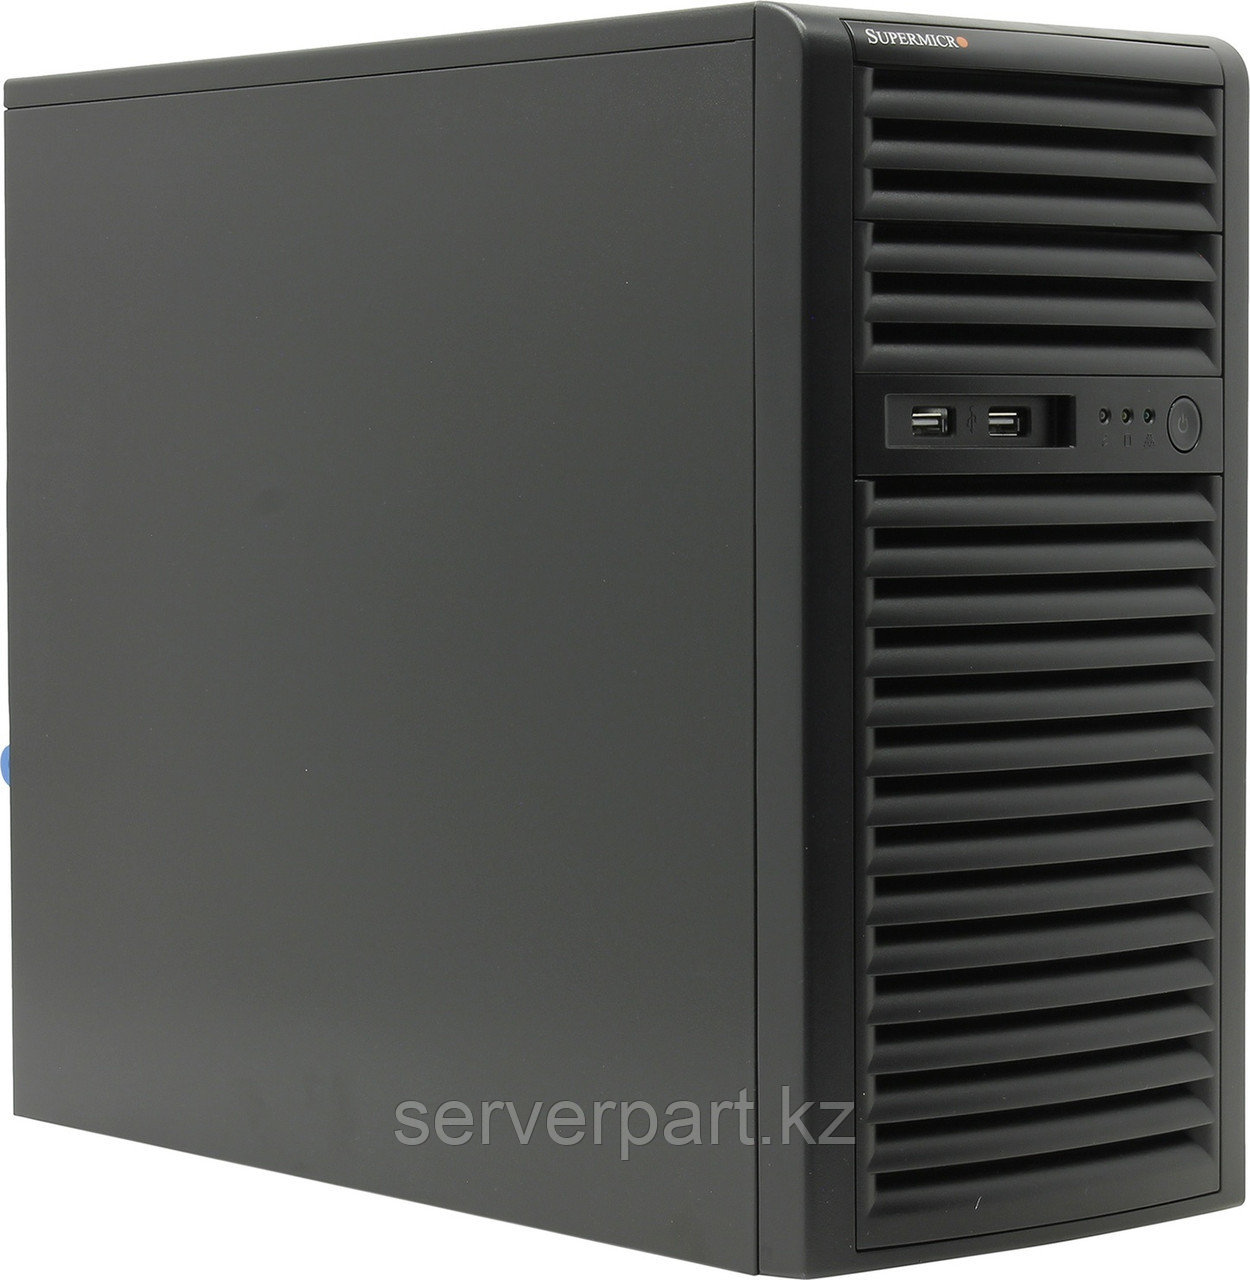 Сервер Supermicro SYS-5039C Tower 4LFF/4-core intel xeon E2124 3.3GHz/64GB EUDIMM/1x240GB SSD RI Hyb